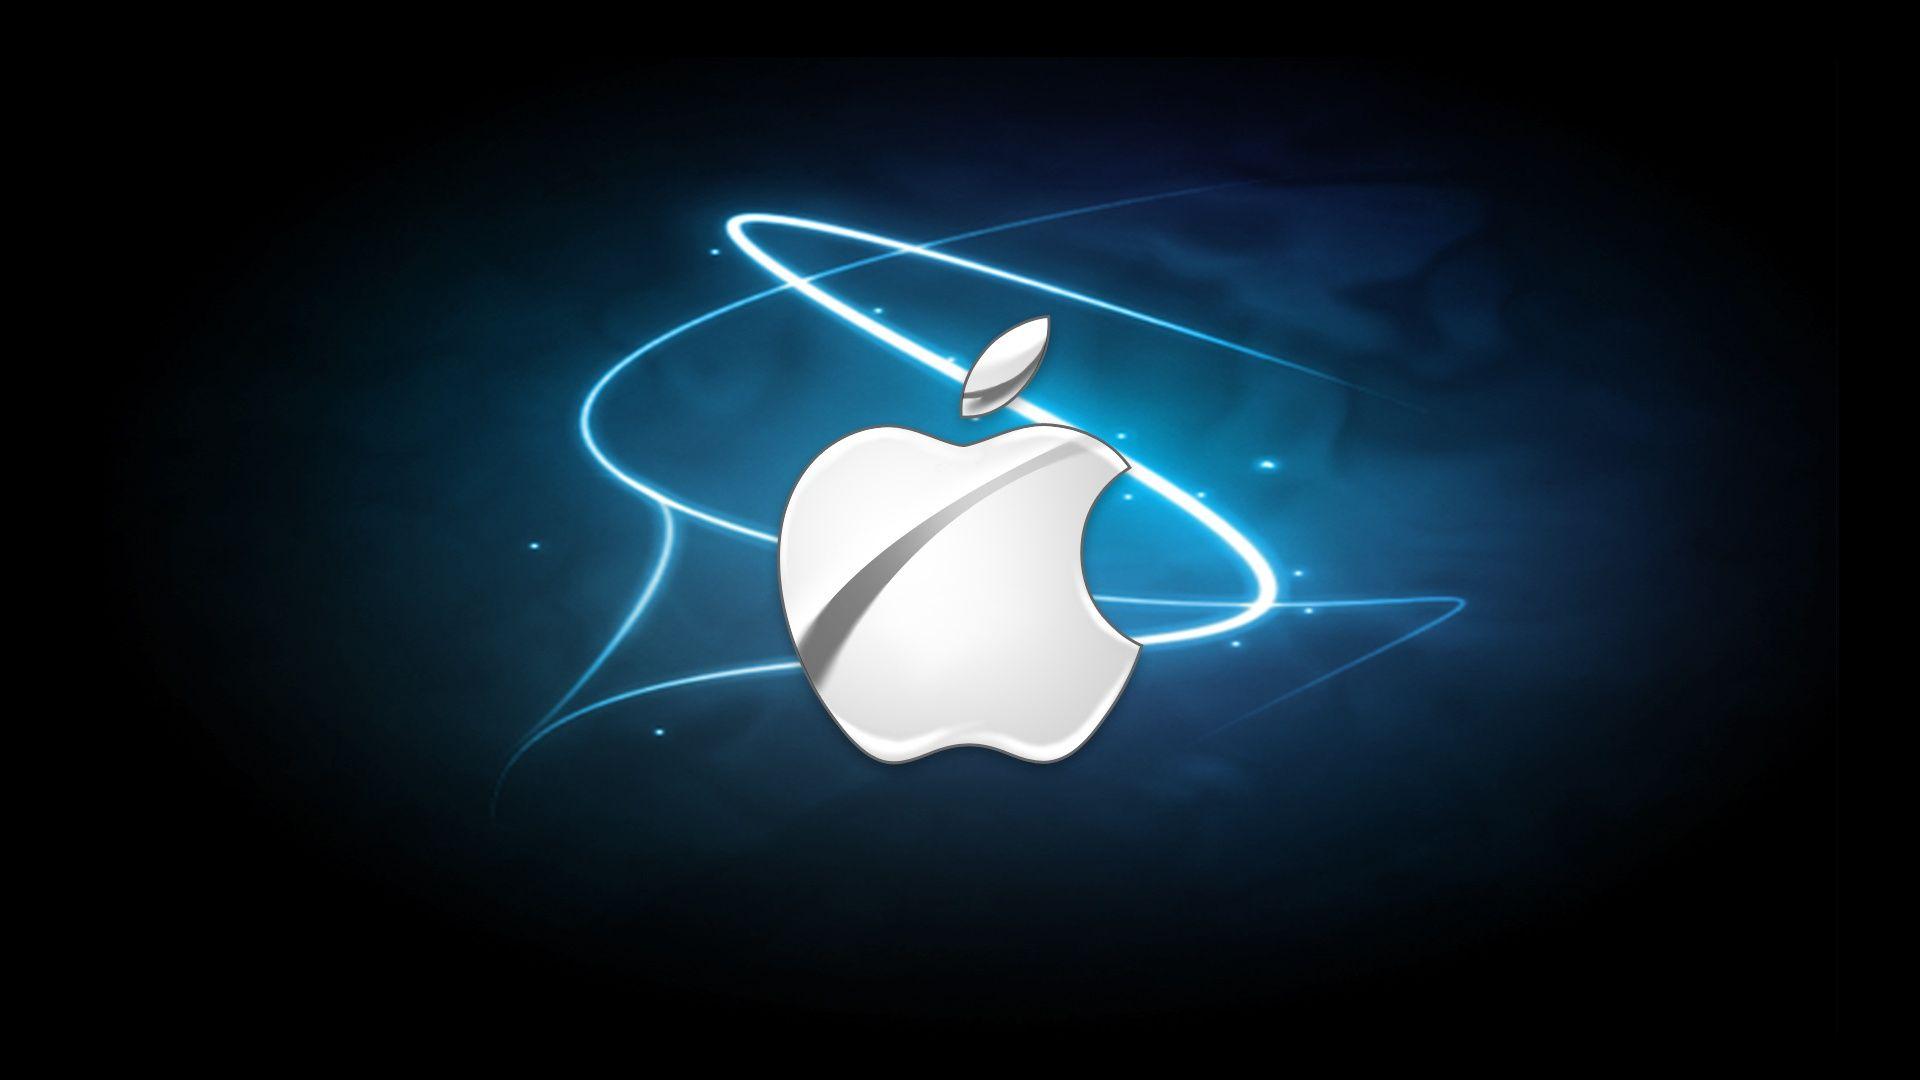 Logos For > Apple Logo Wallpaper HD 1080p Black